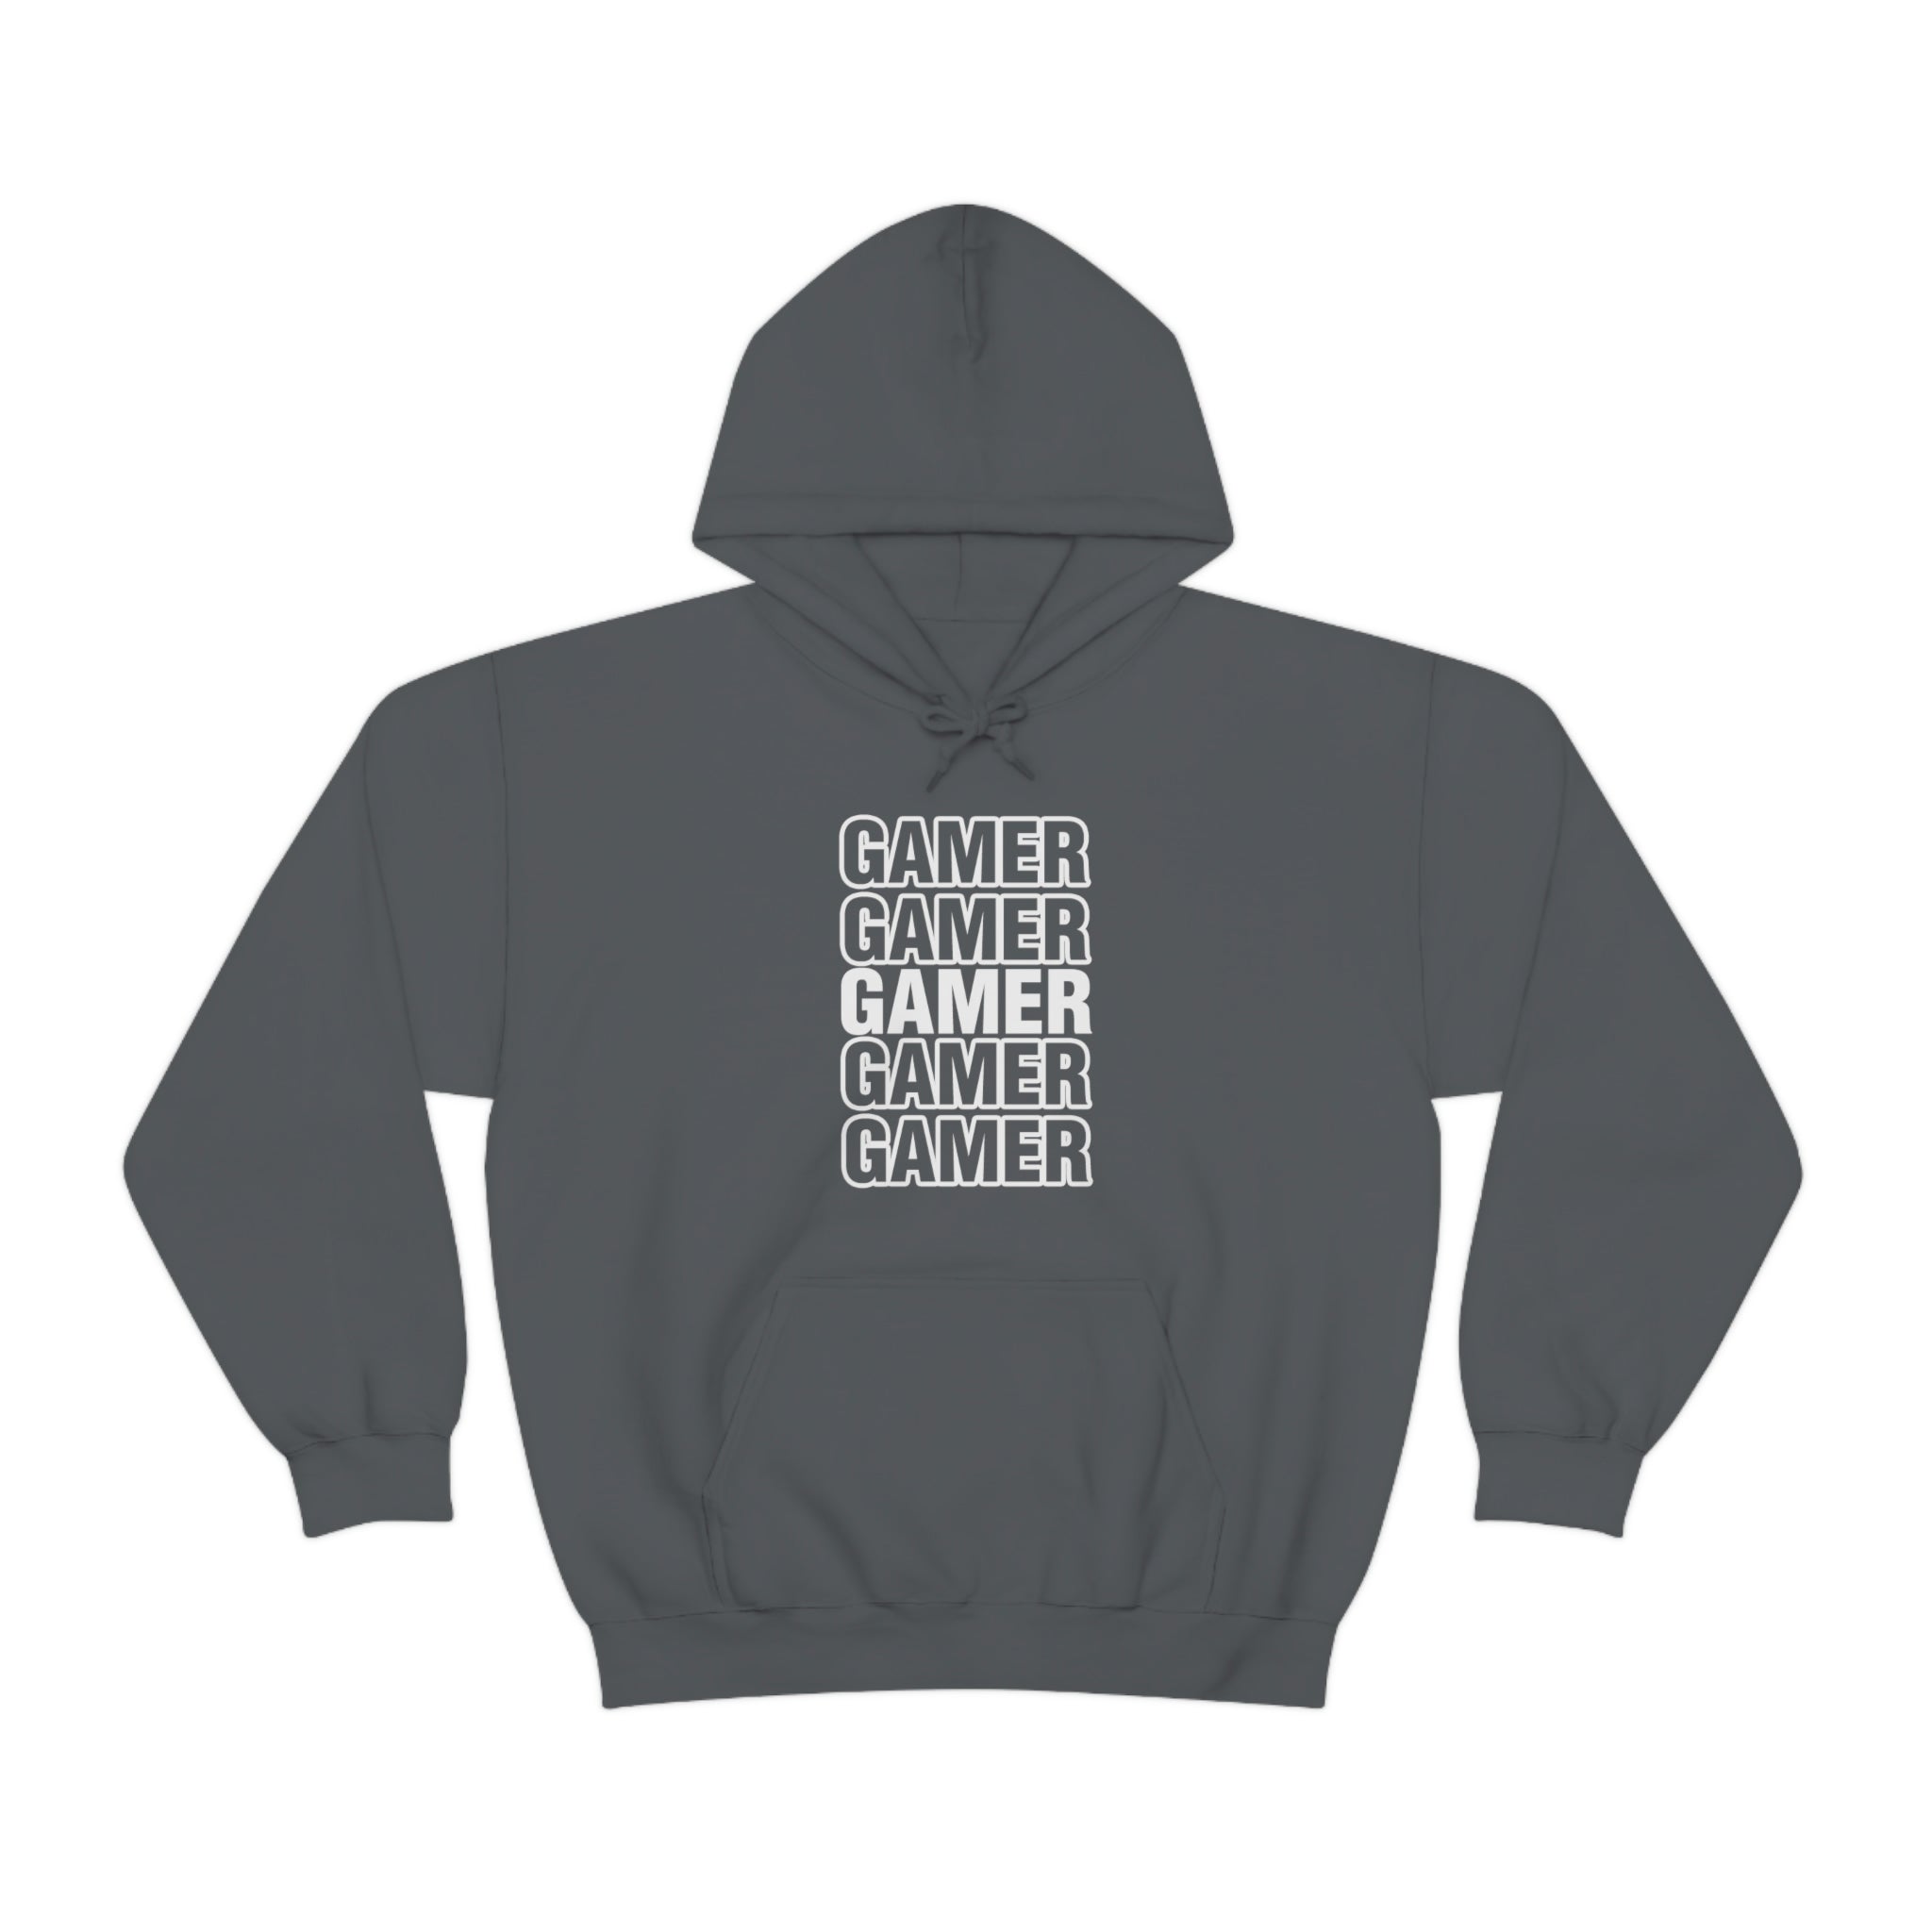 Gamer Hoodie - Heavy Blend - Gift for Gamers